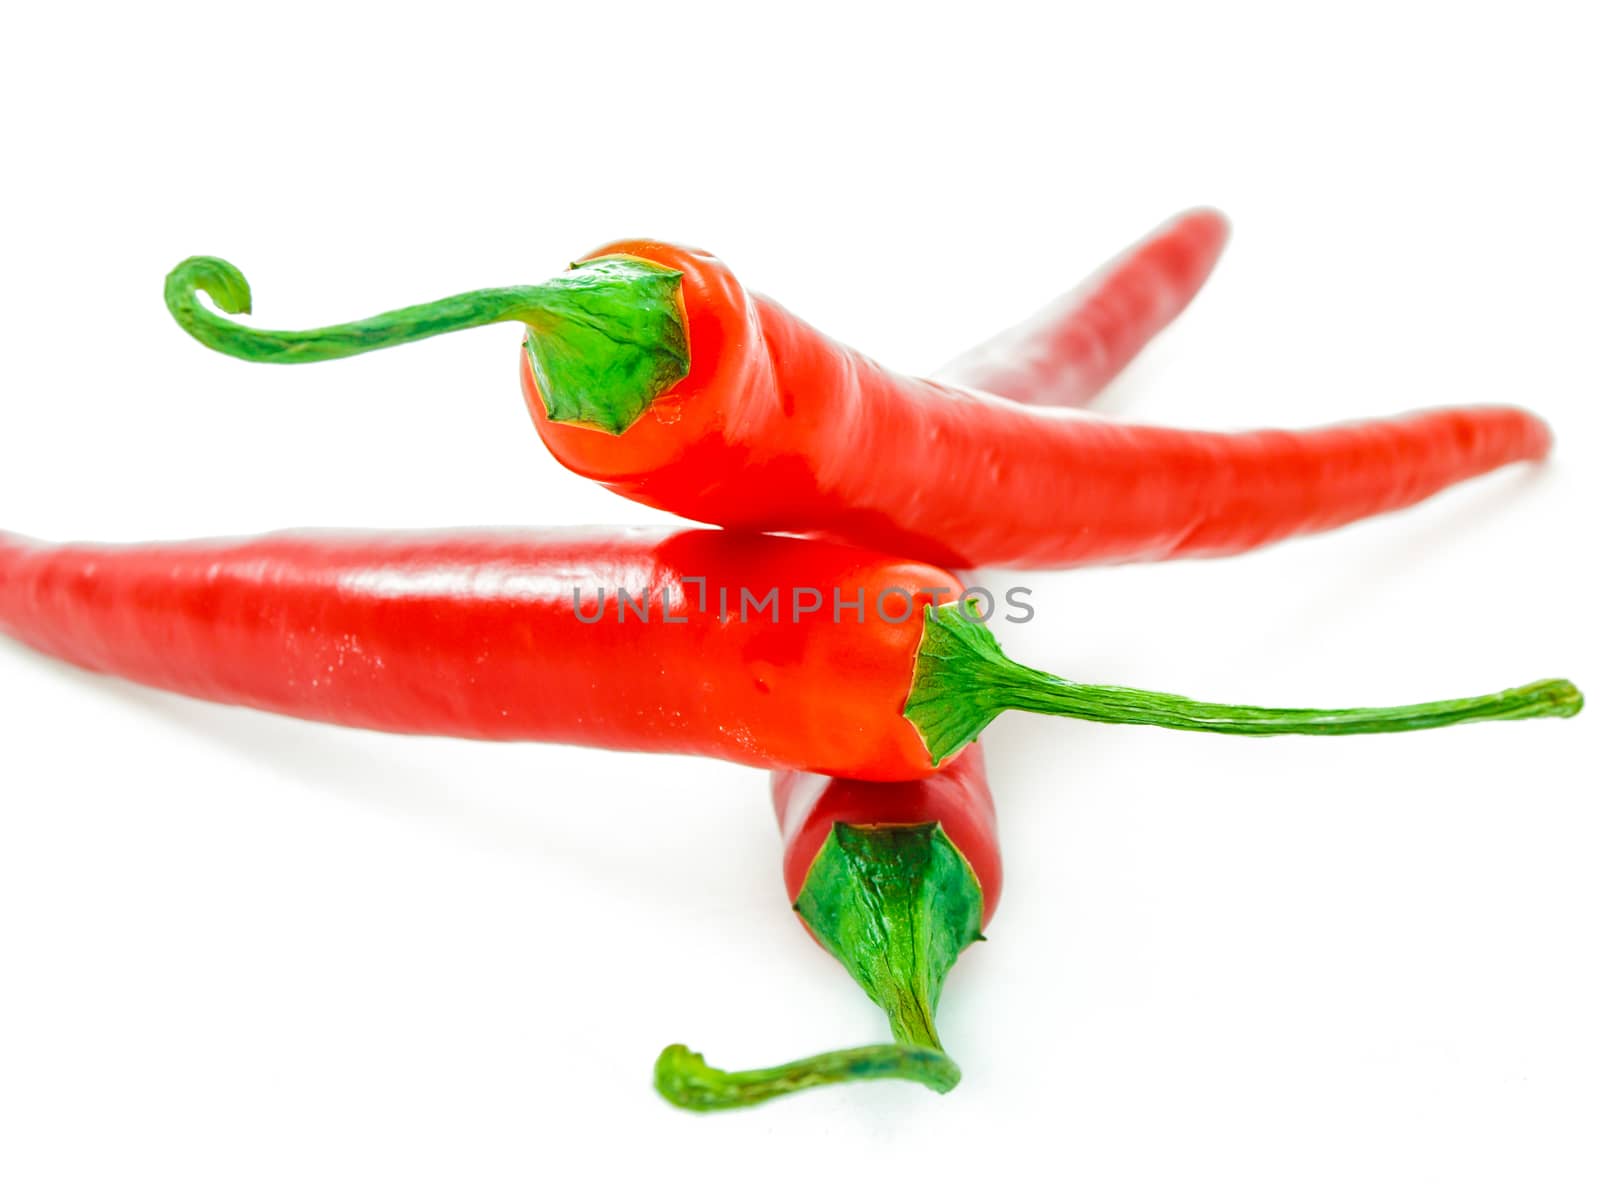 Red chili pepper by Arvebettum